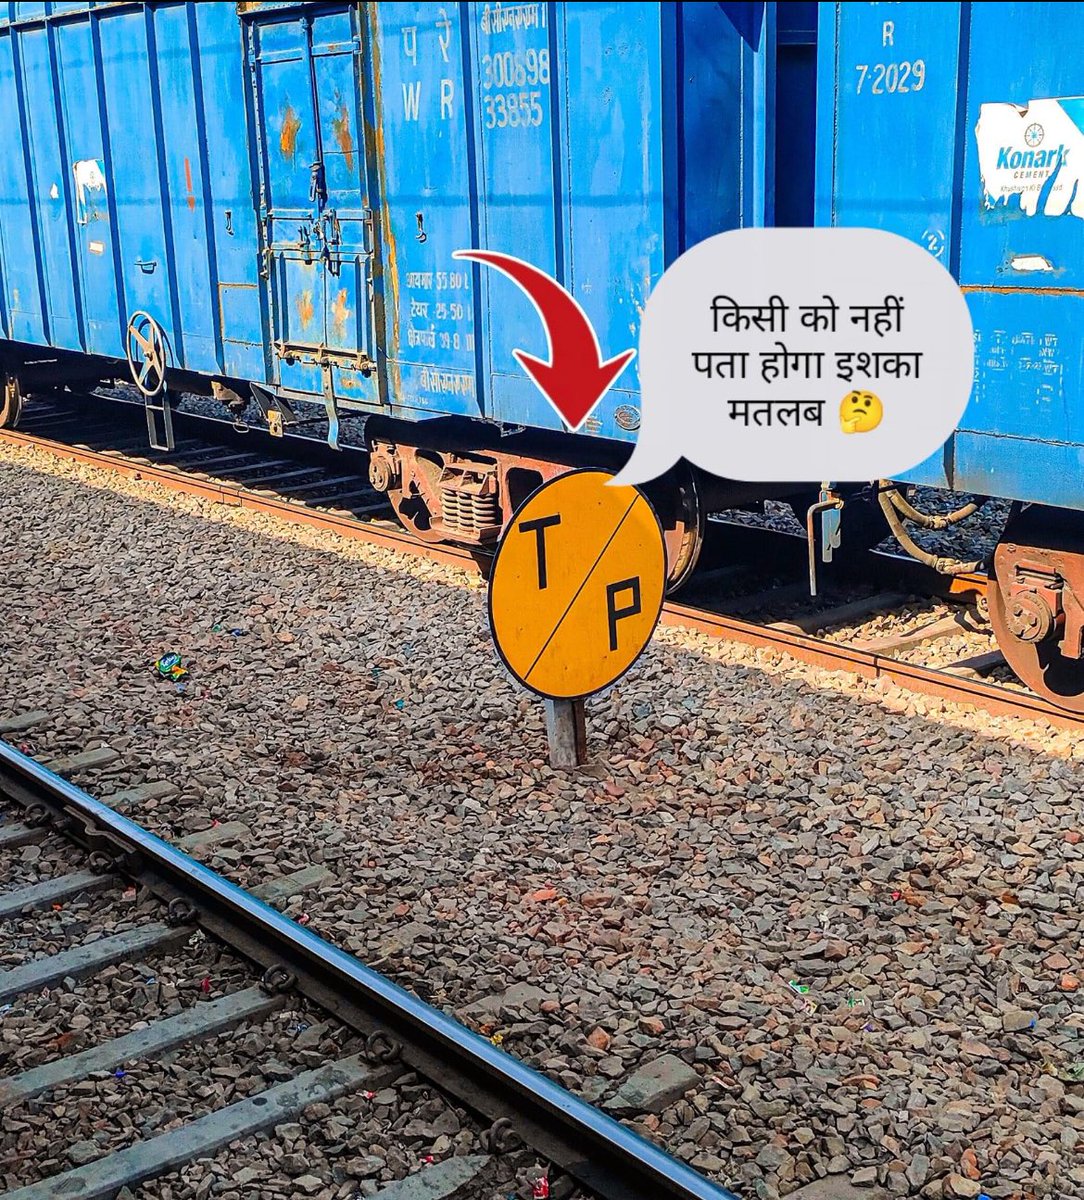 T/P का मतलब ज़रूर बताना🤔
#trainphoto 
#trainvideo 
#indianrailways #BestPhotographyChallenge 
#railwaystation 
#Facebook 
#railphotography 
#fbpost 
#bestchallenge 
#virals 
#creater 
#likeforlikes #photographychallengechallenge #trending 
#beautifulchallenge